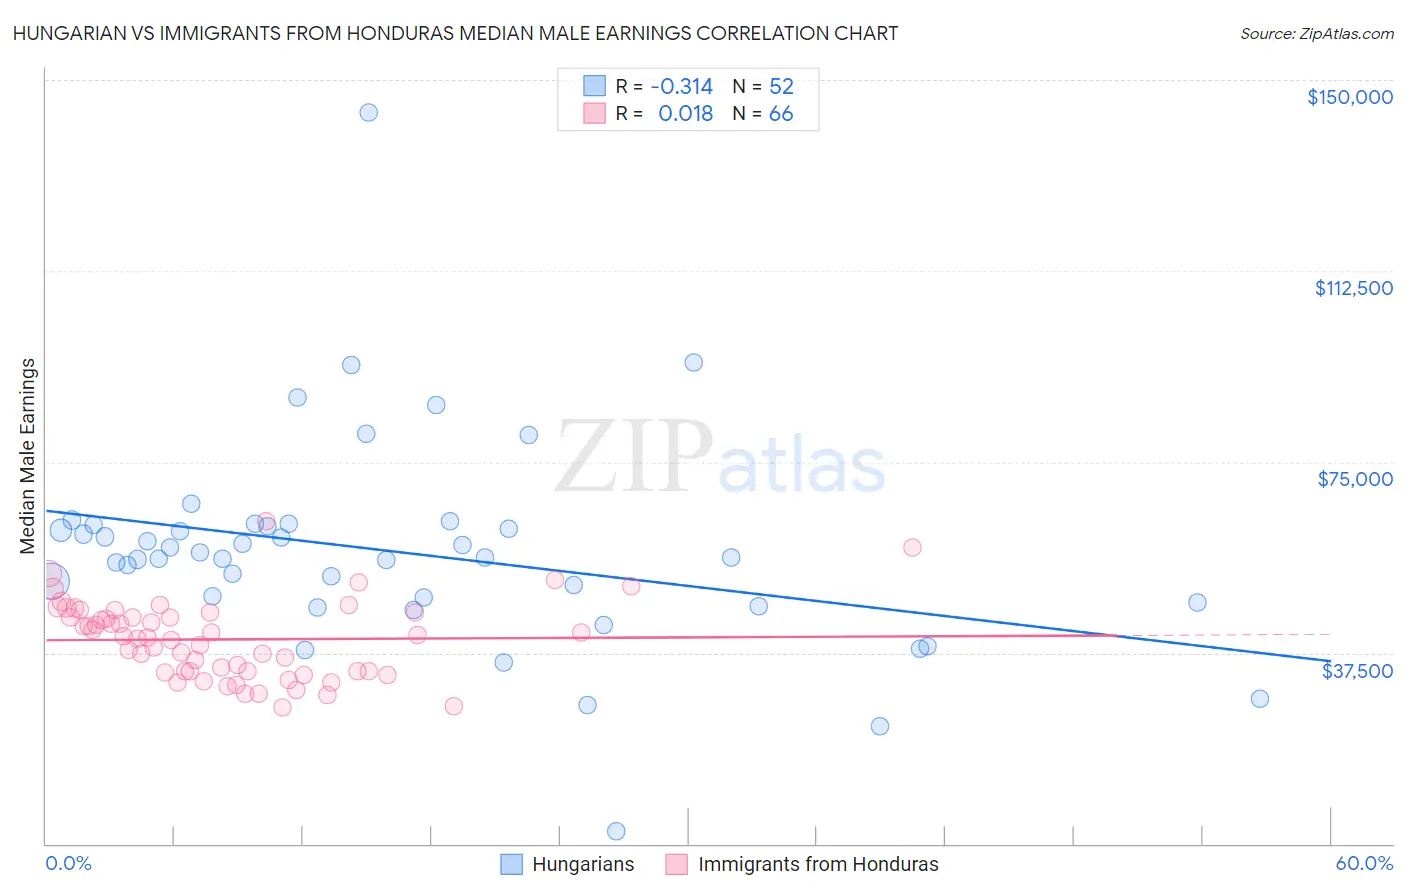 Hungarian vs Immigrants from Honduras Median Male Earnings